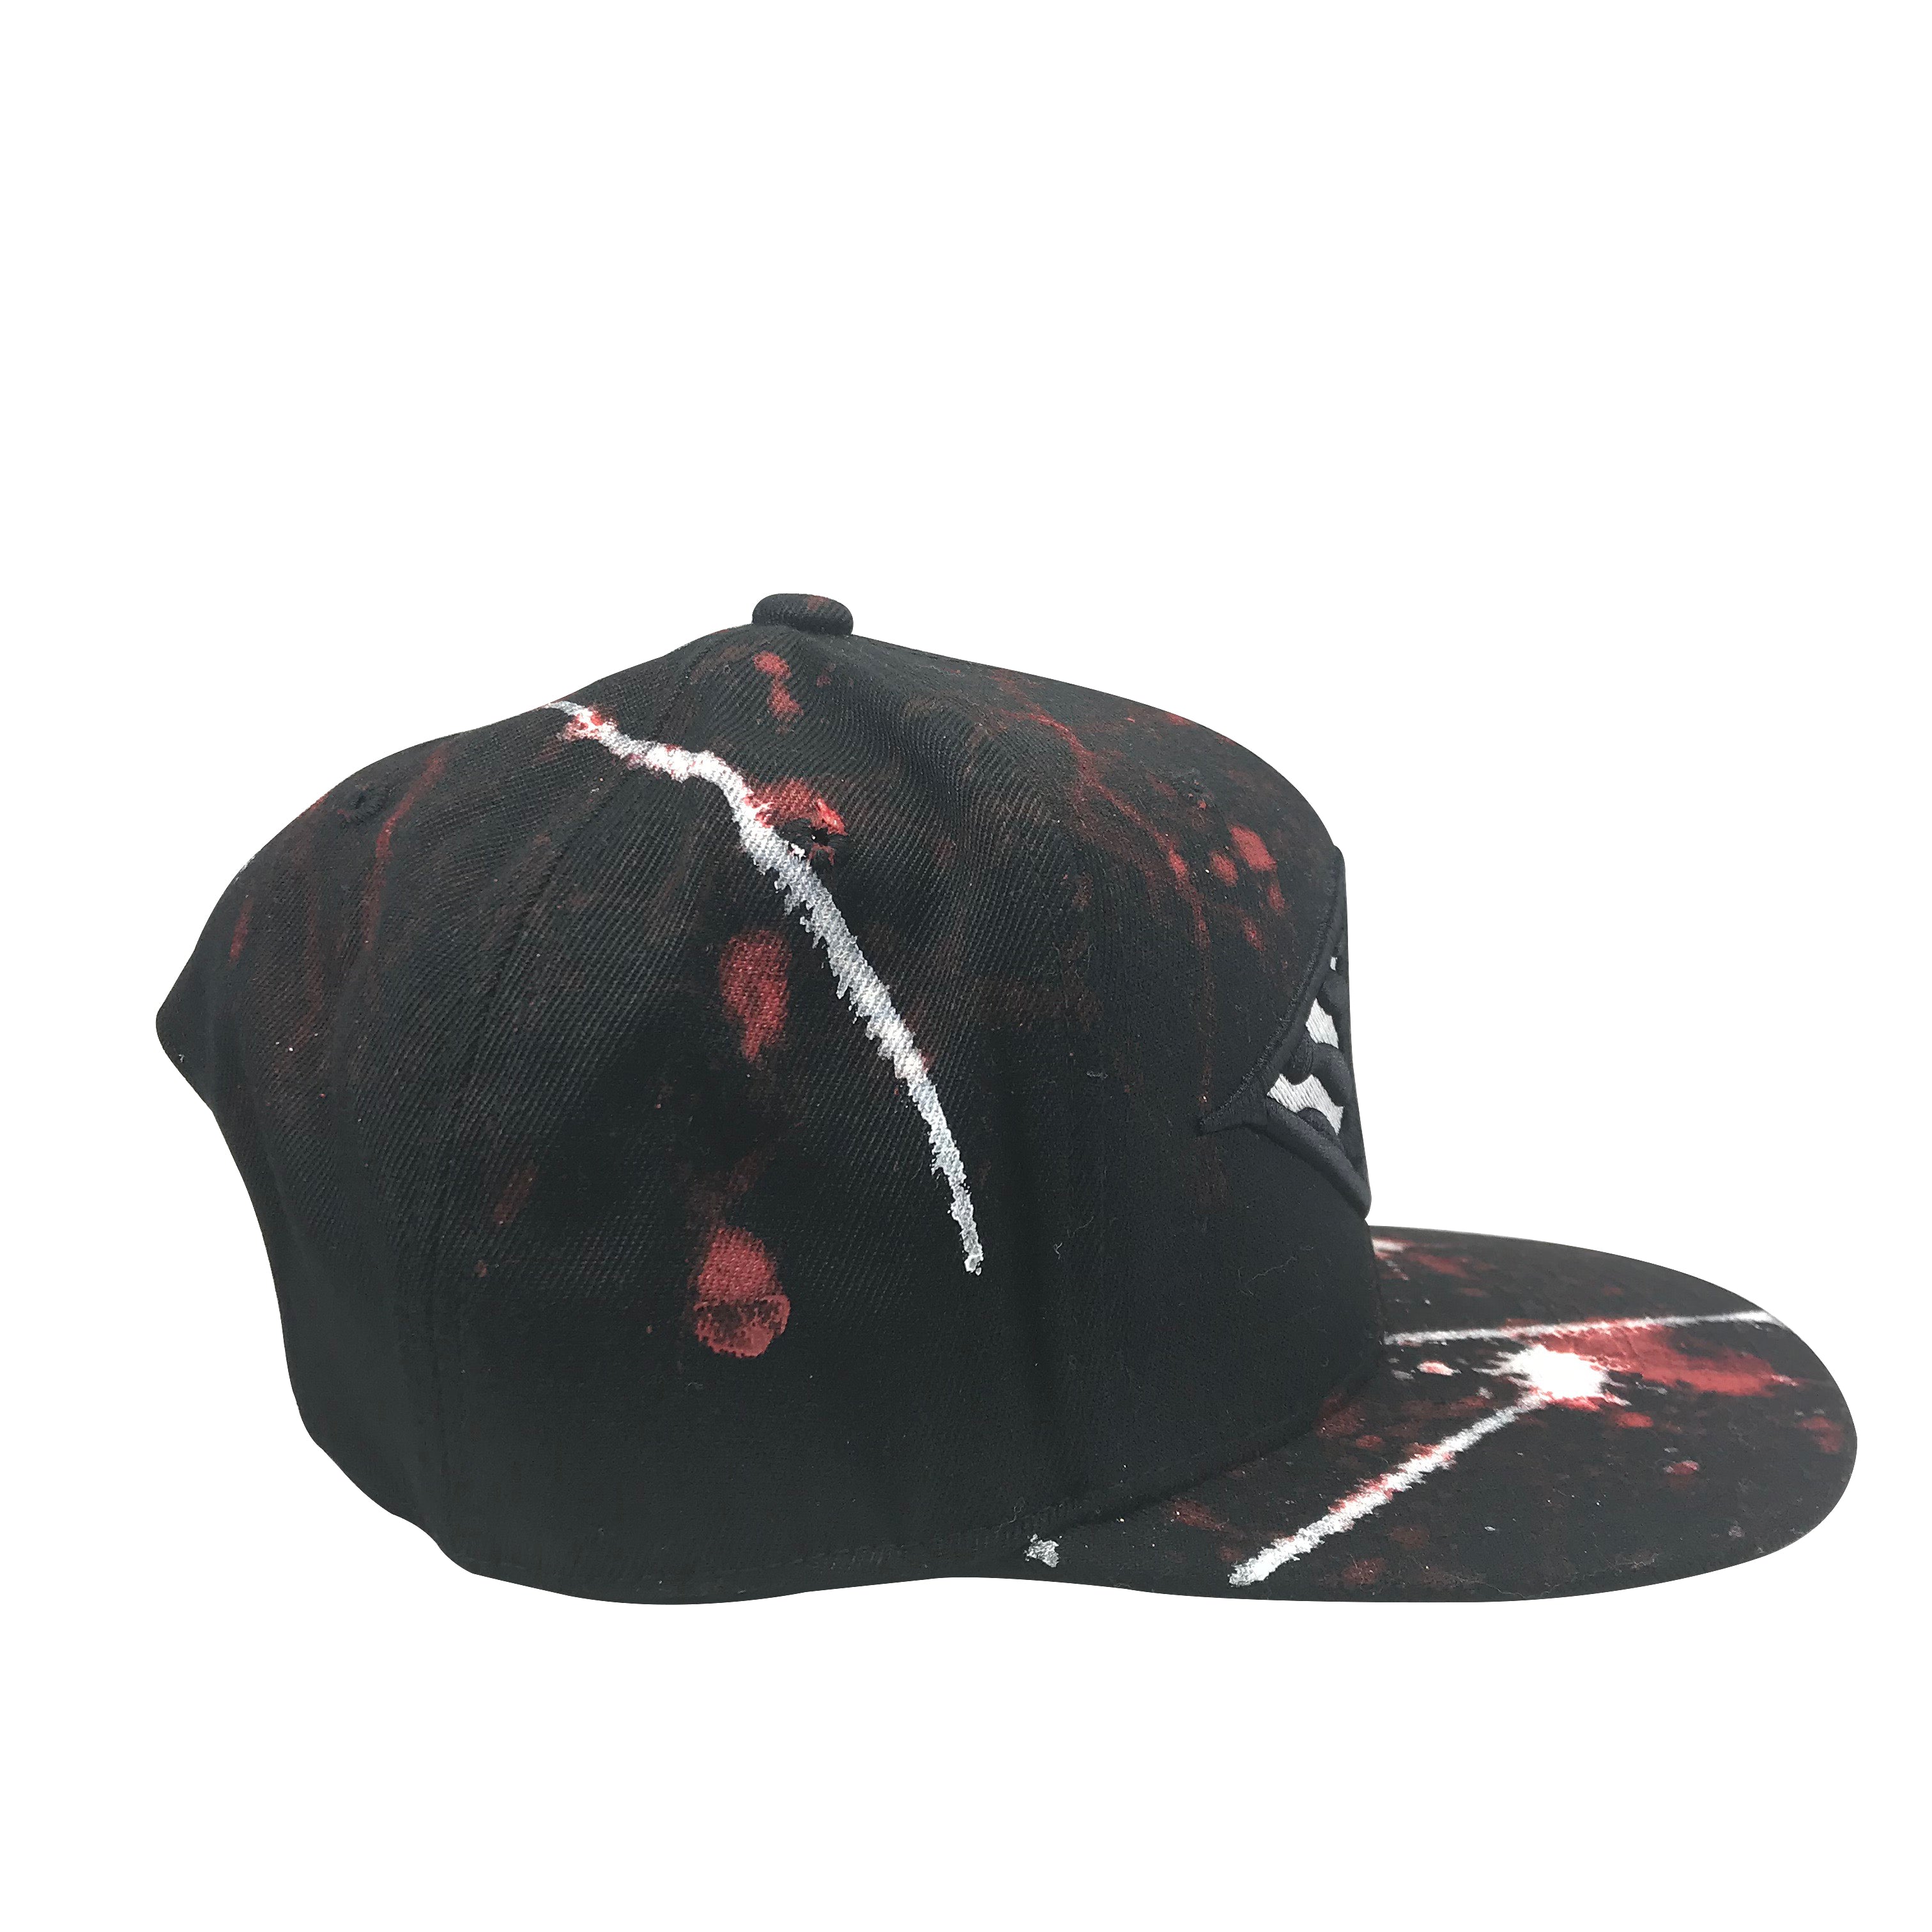 Hat - Unique hand painted  -  Black/Red